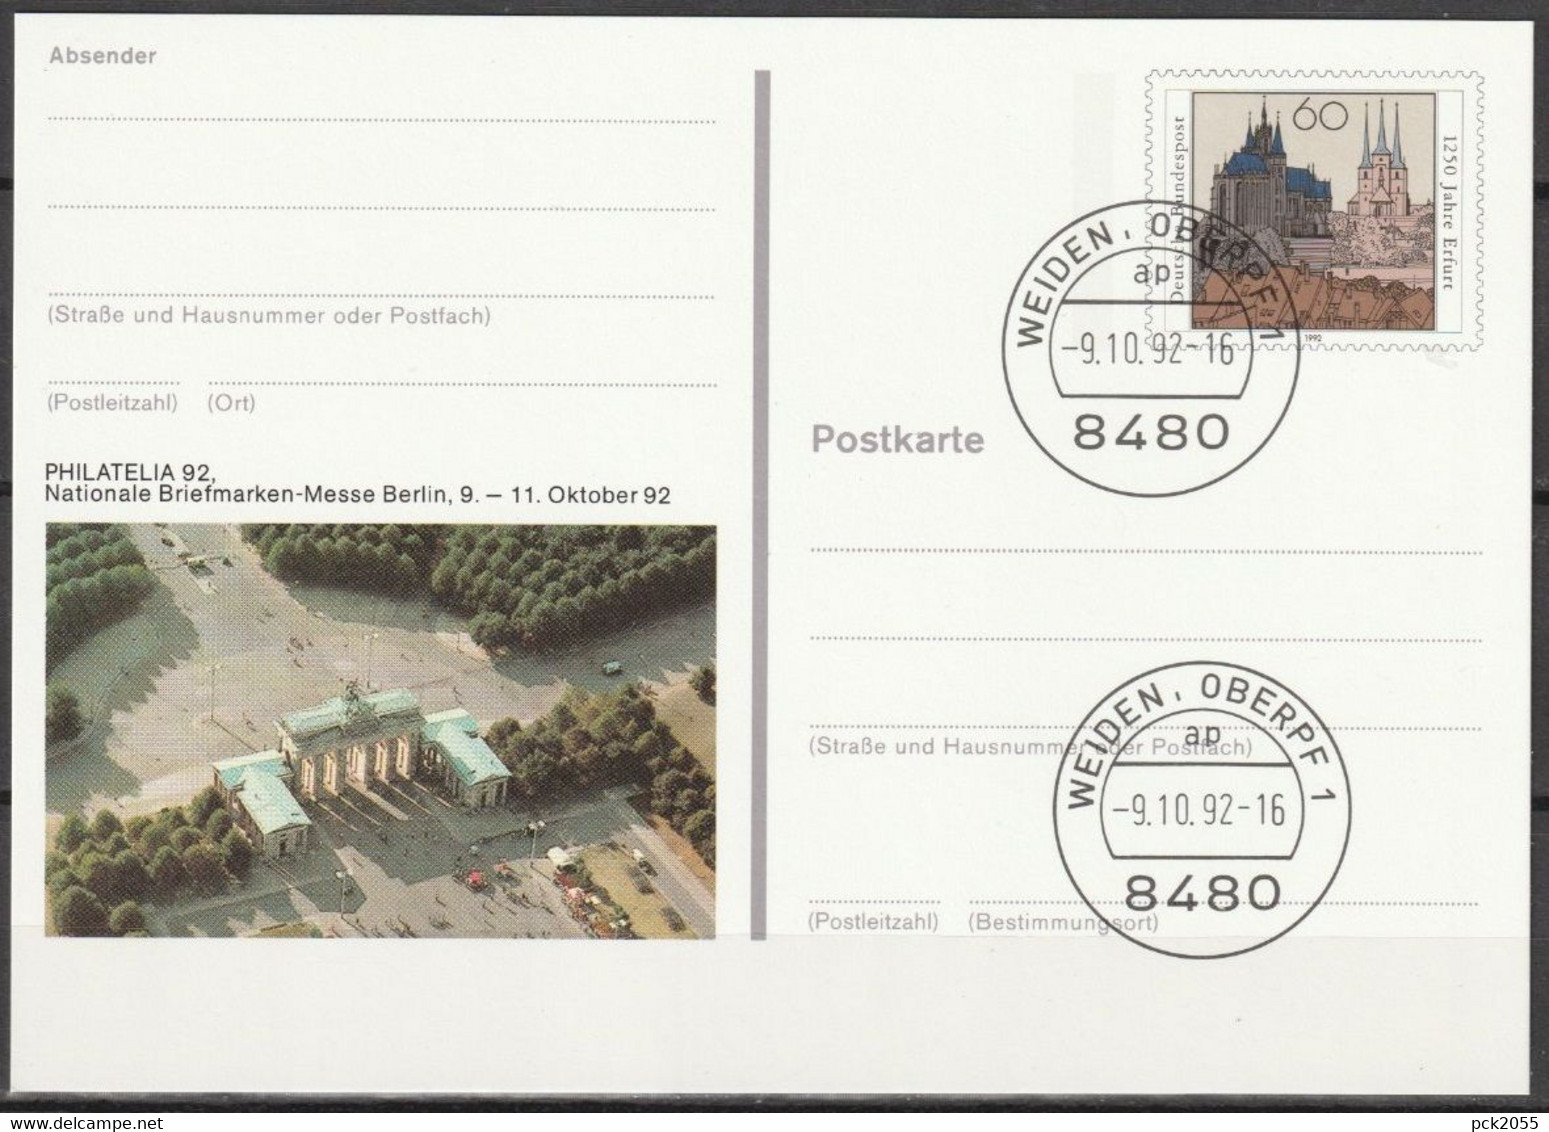 BRD Ganzsache1992 PSo28 Philatelia92 Berlin Ersttagsstempel 9.10.92 WEIDEN OBERPF (d3819)günstige Versandkosten - Postkarten - Gebraucht